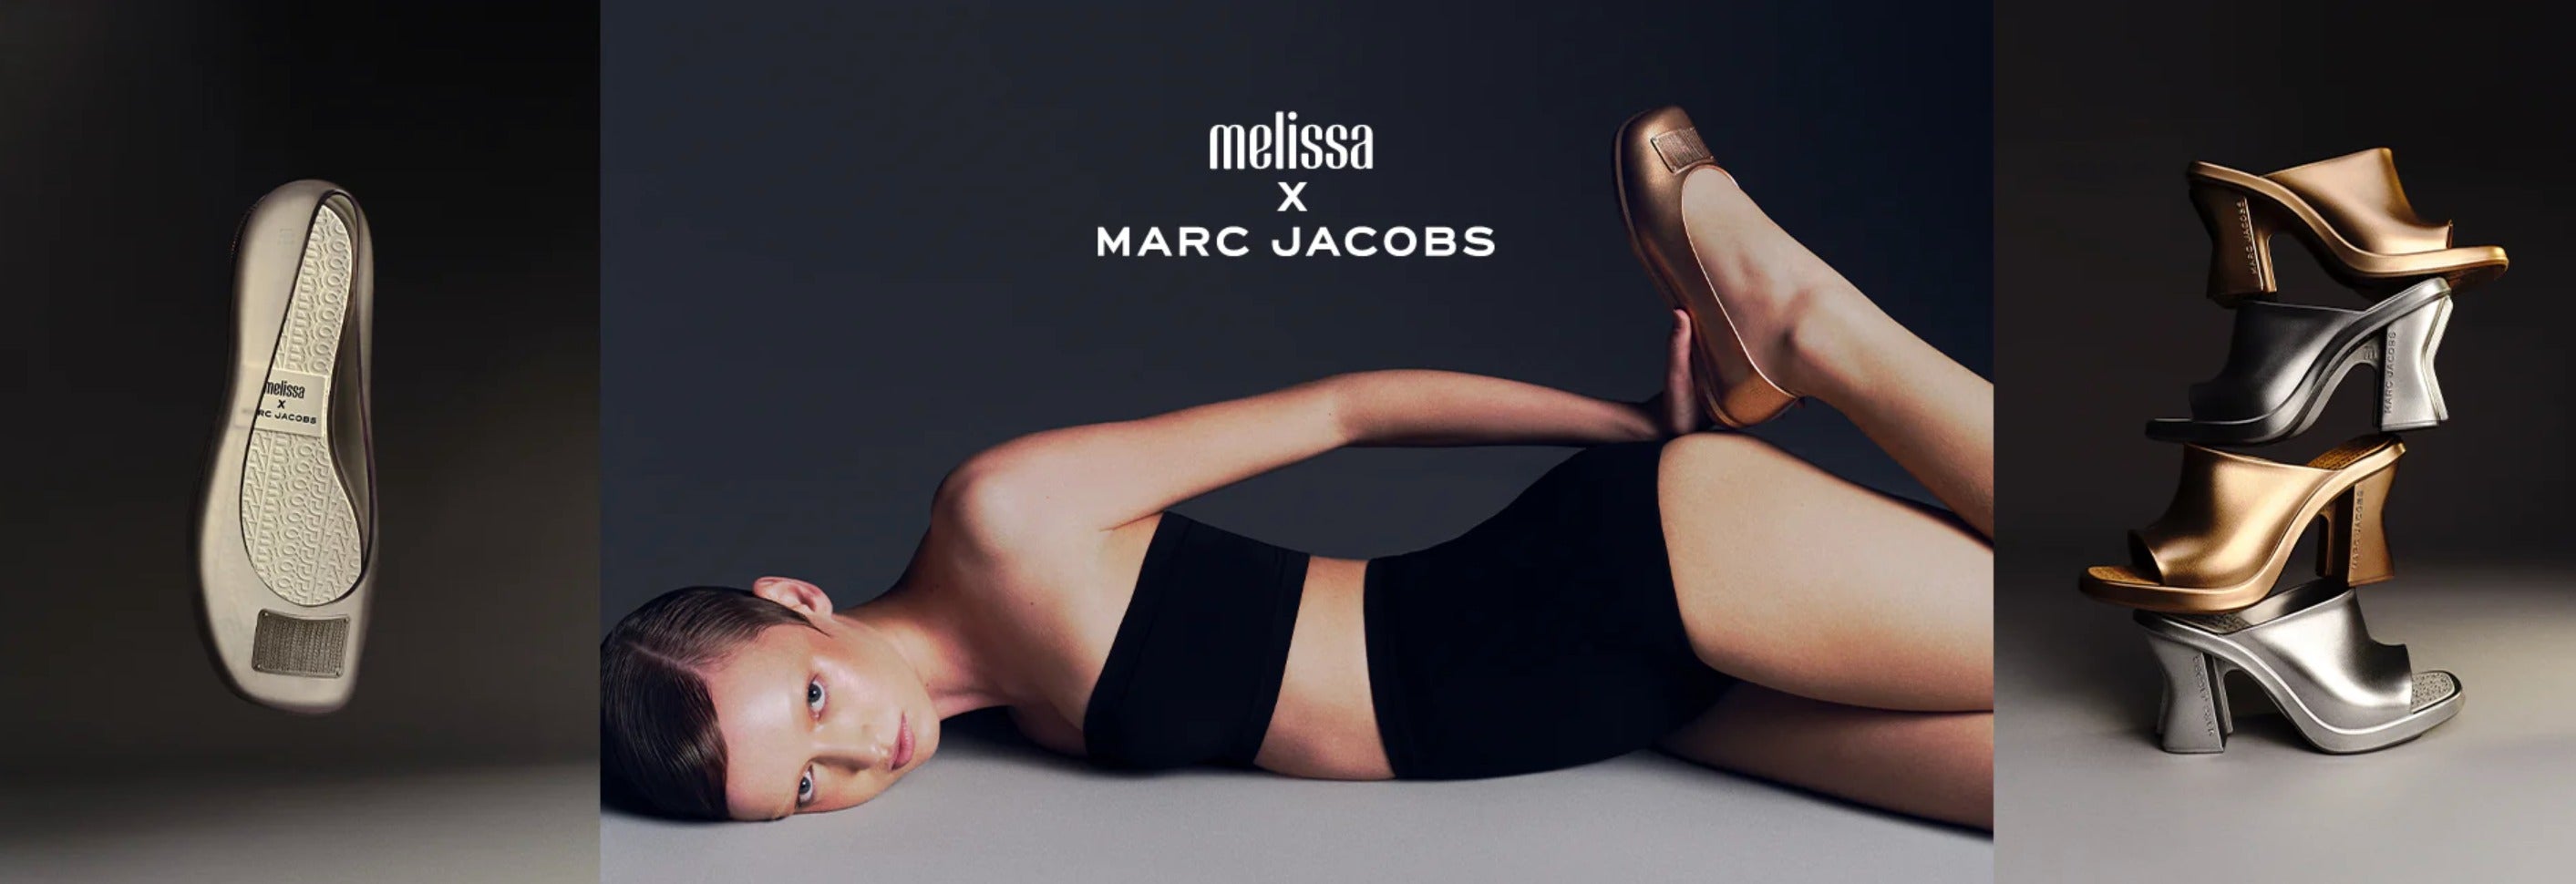 Melissa x MARC JACOBS | melissa shoes Japan